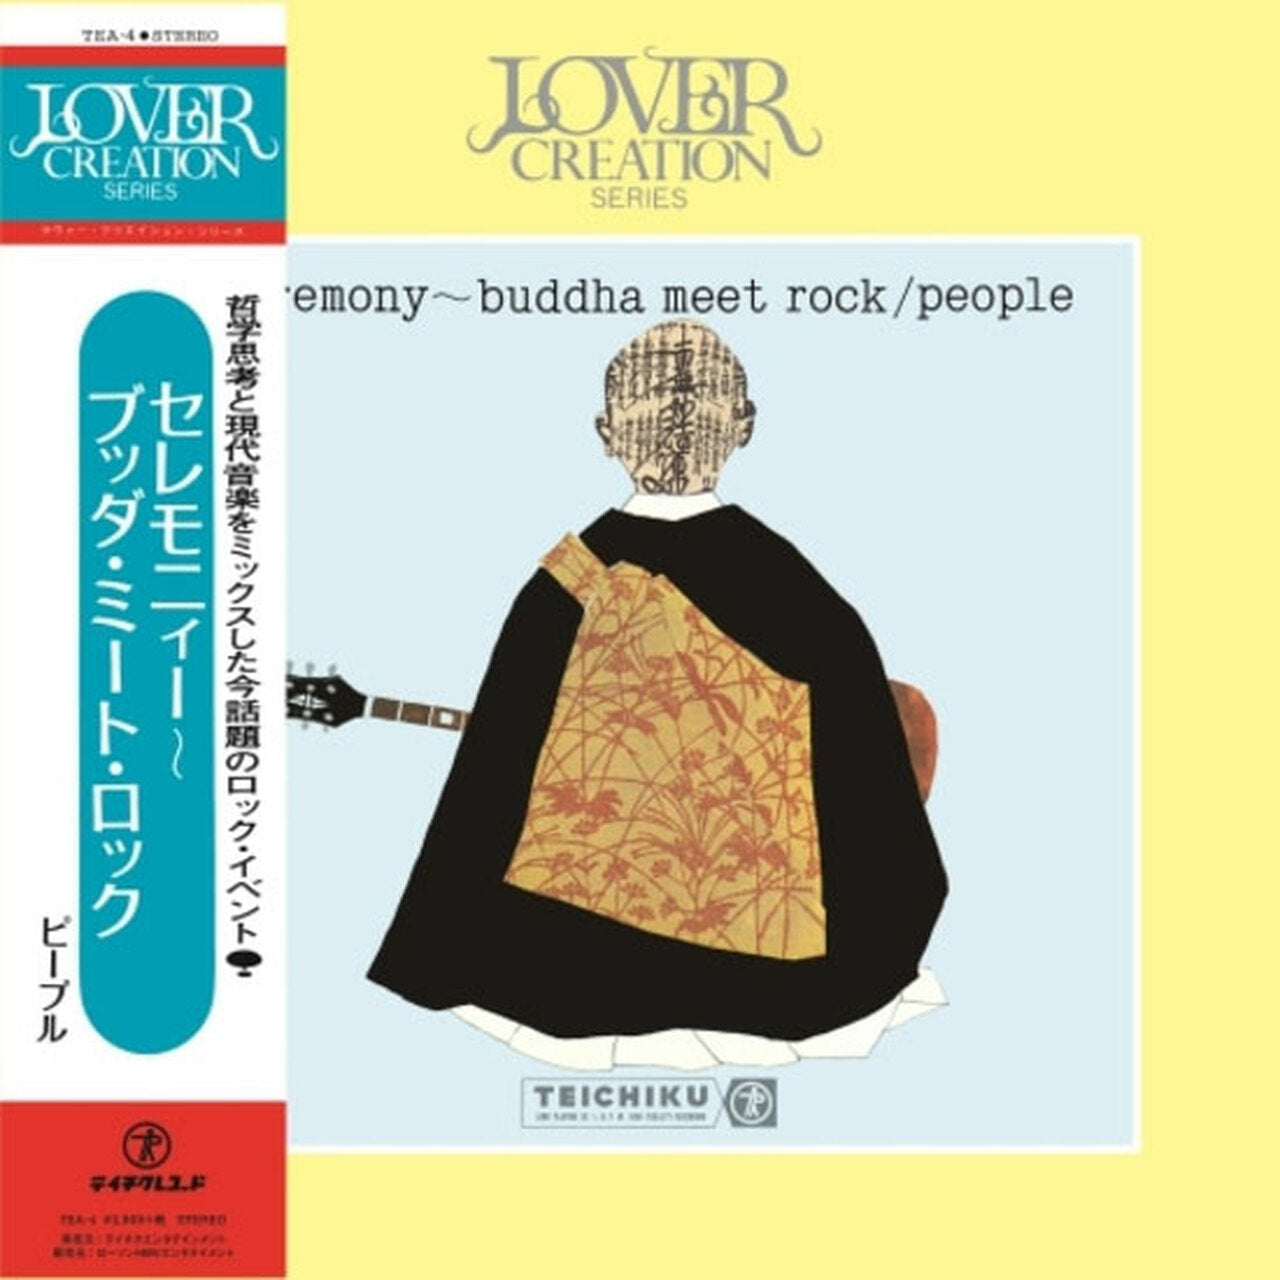 People - Ceremony Buddha Meet Rock LP (Limited Edition, Reissue, Japanese Import, OBI Strip)